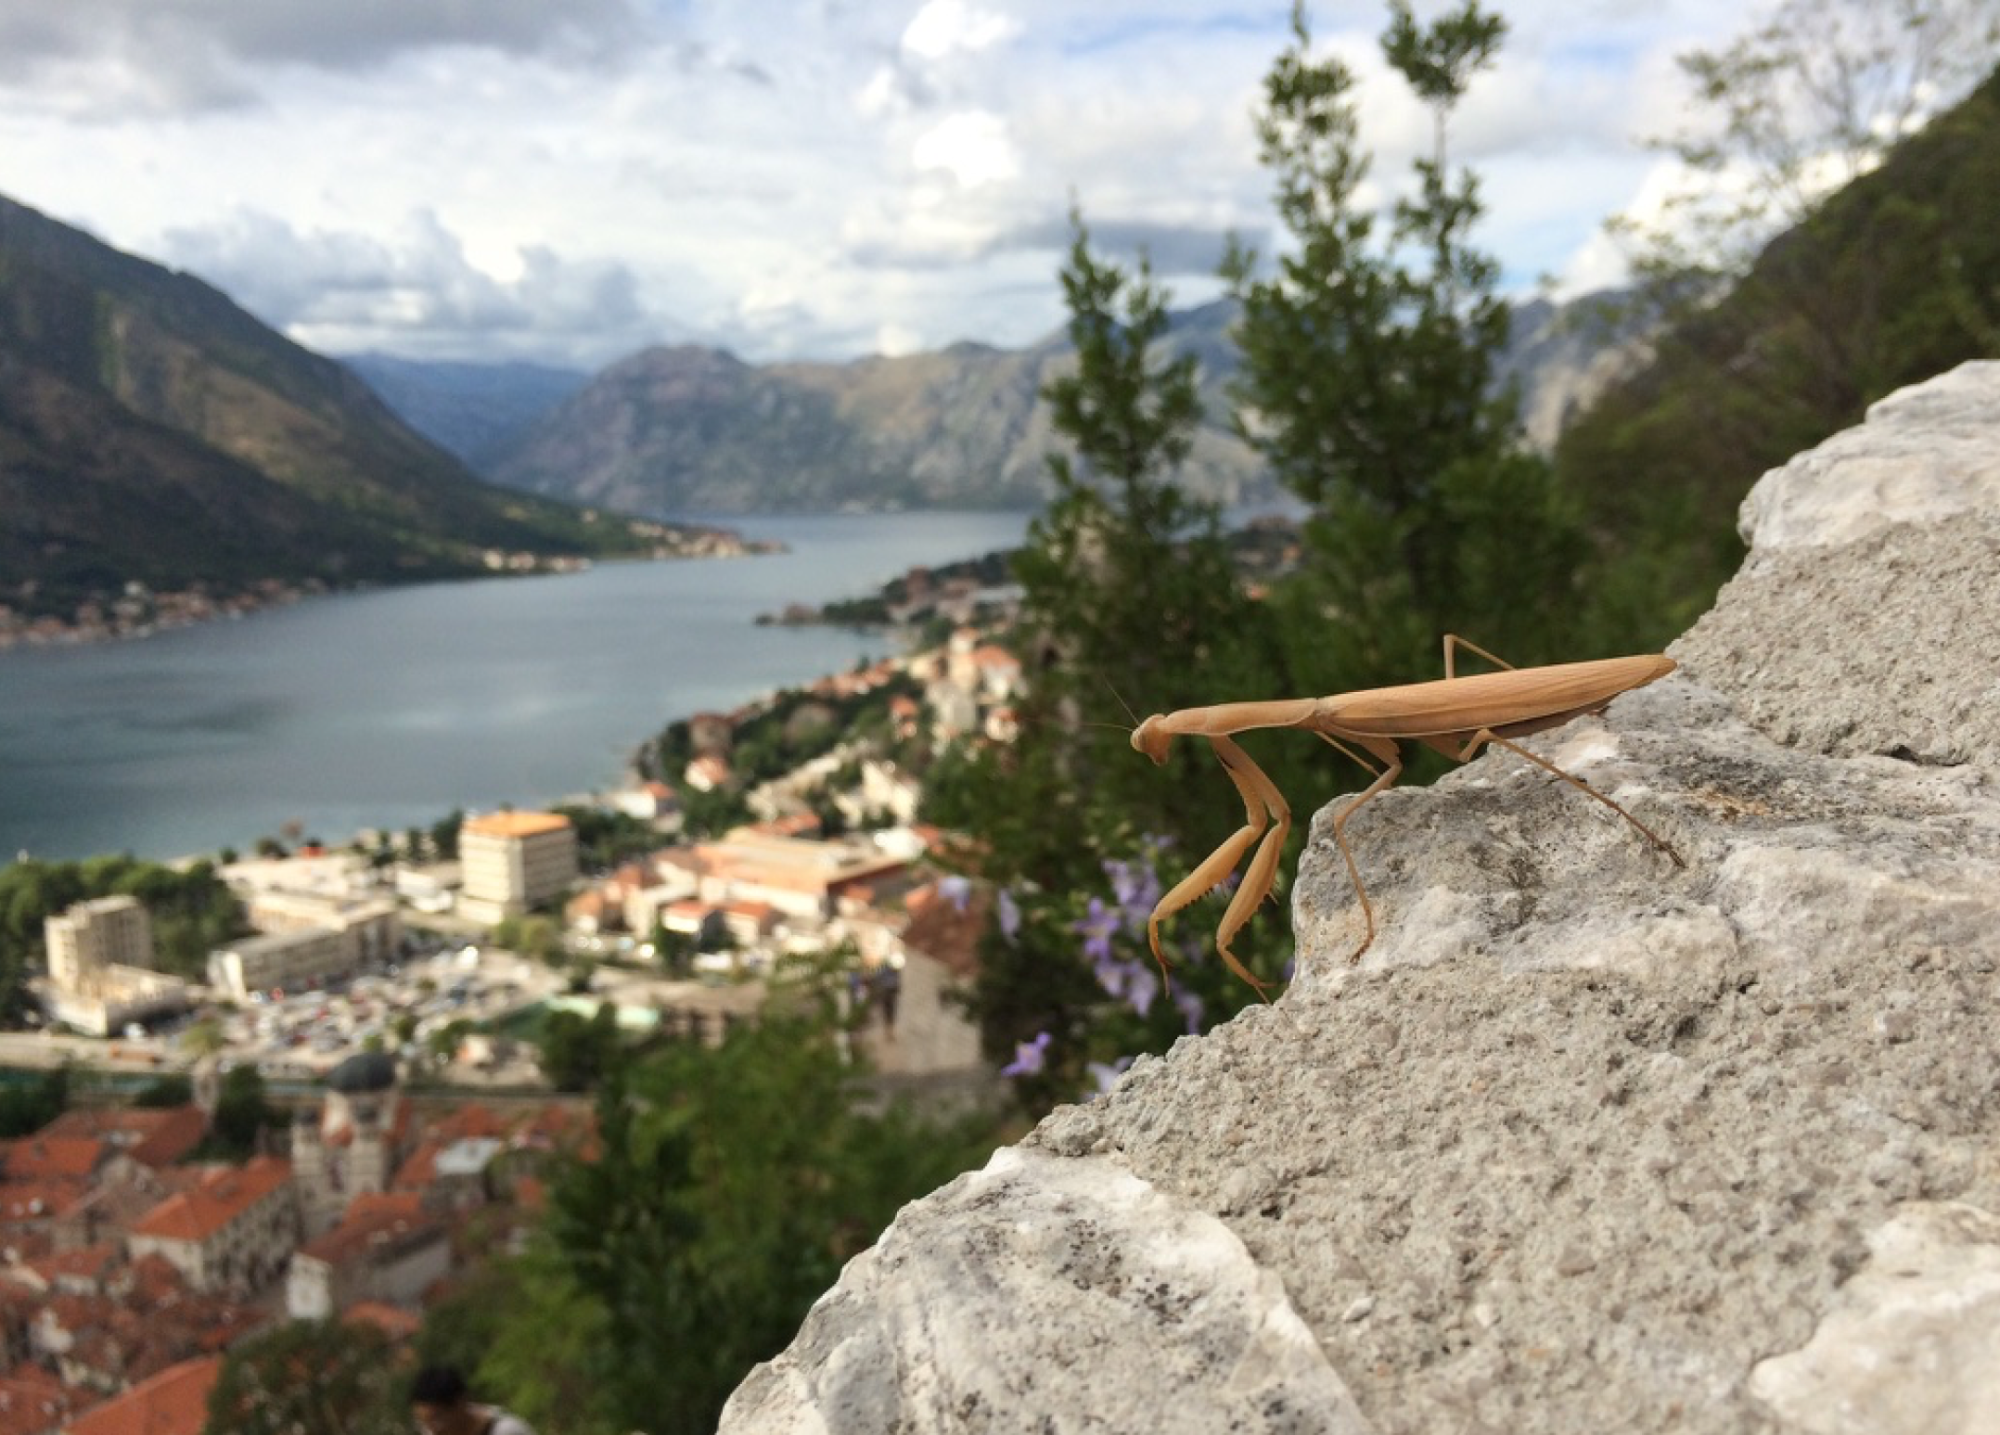 Mantis) on the city walls of Kotor